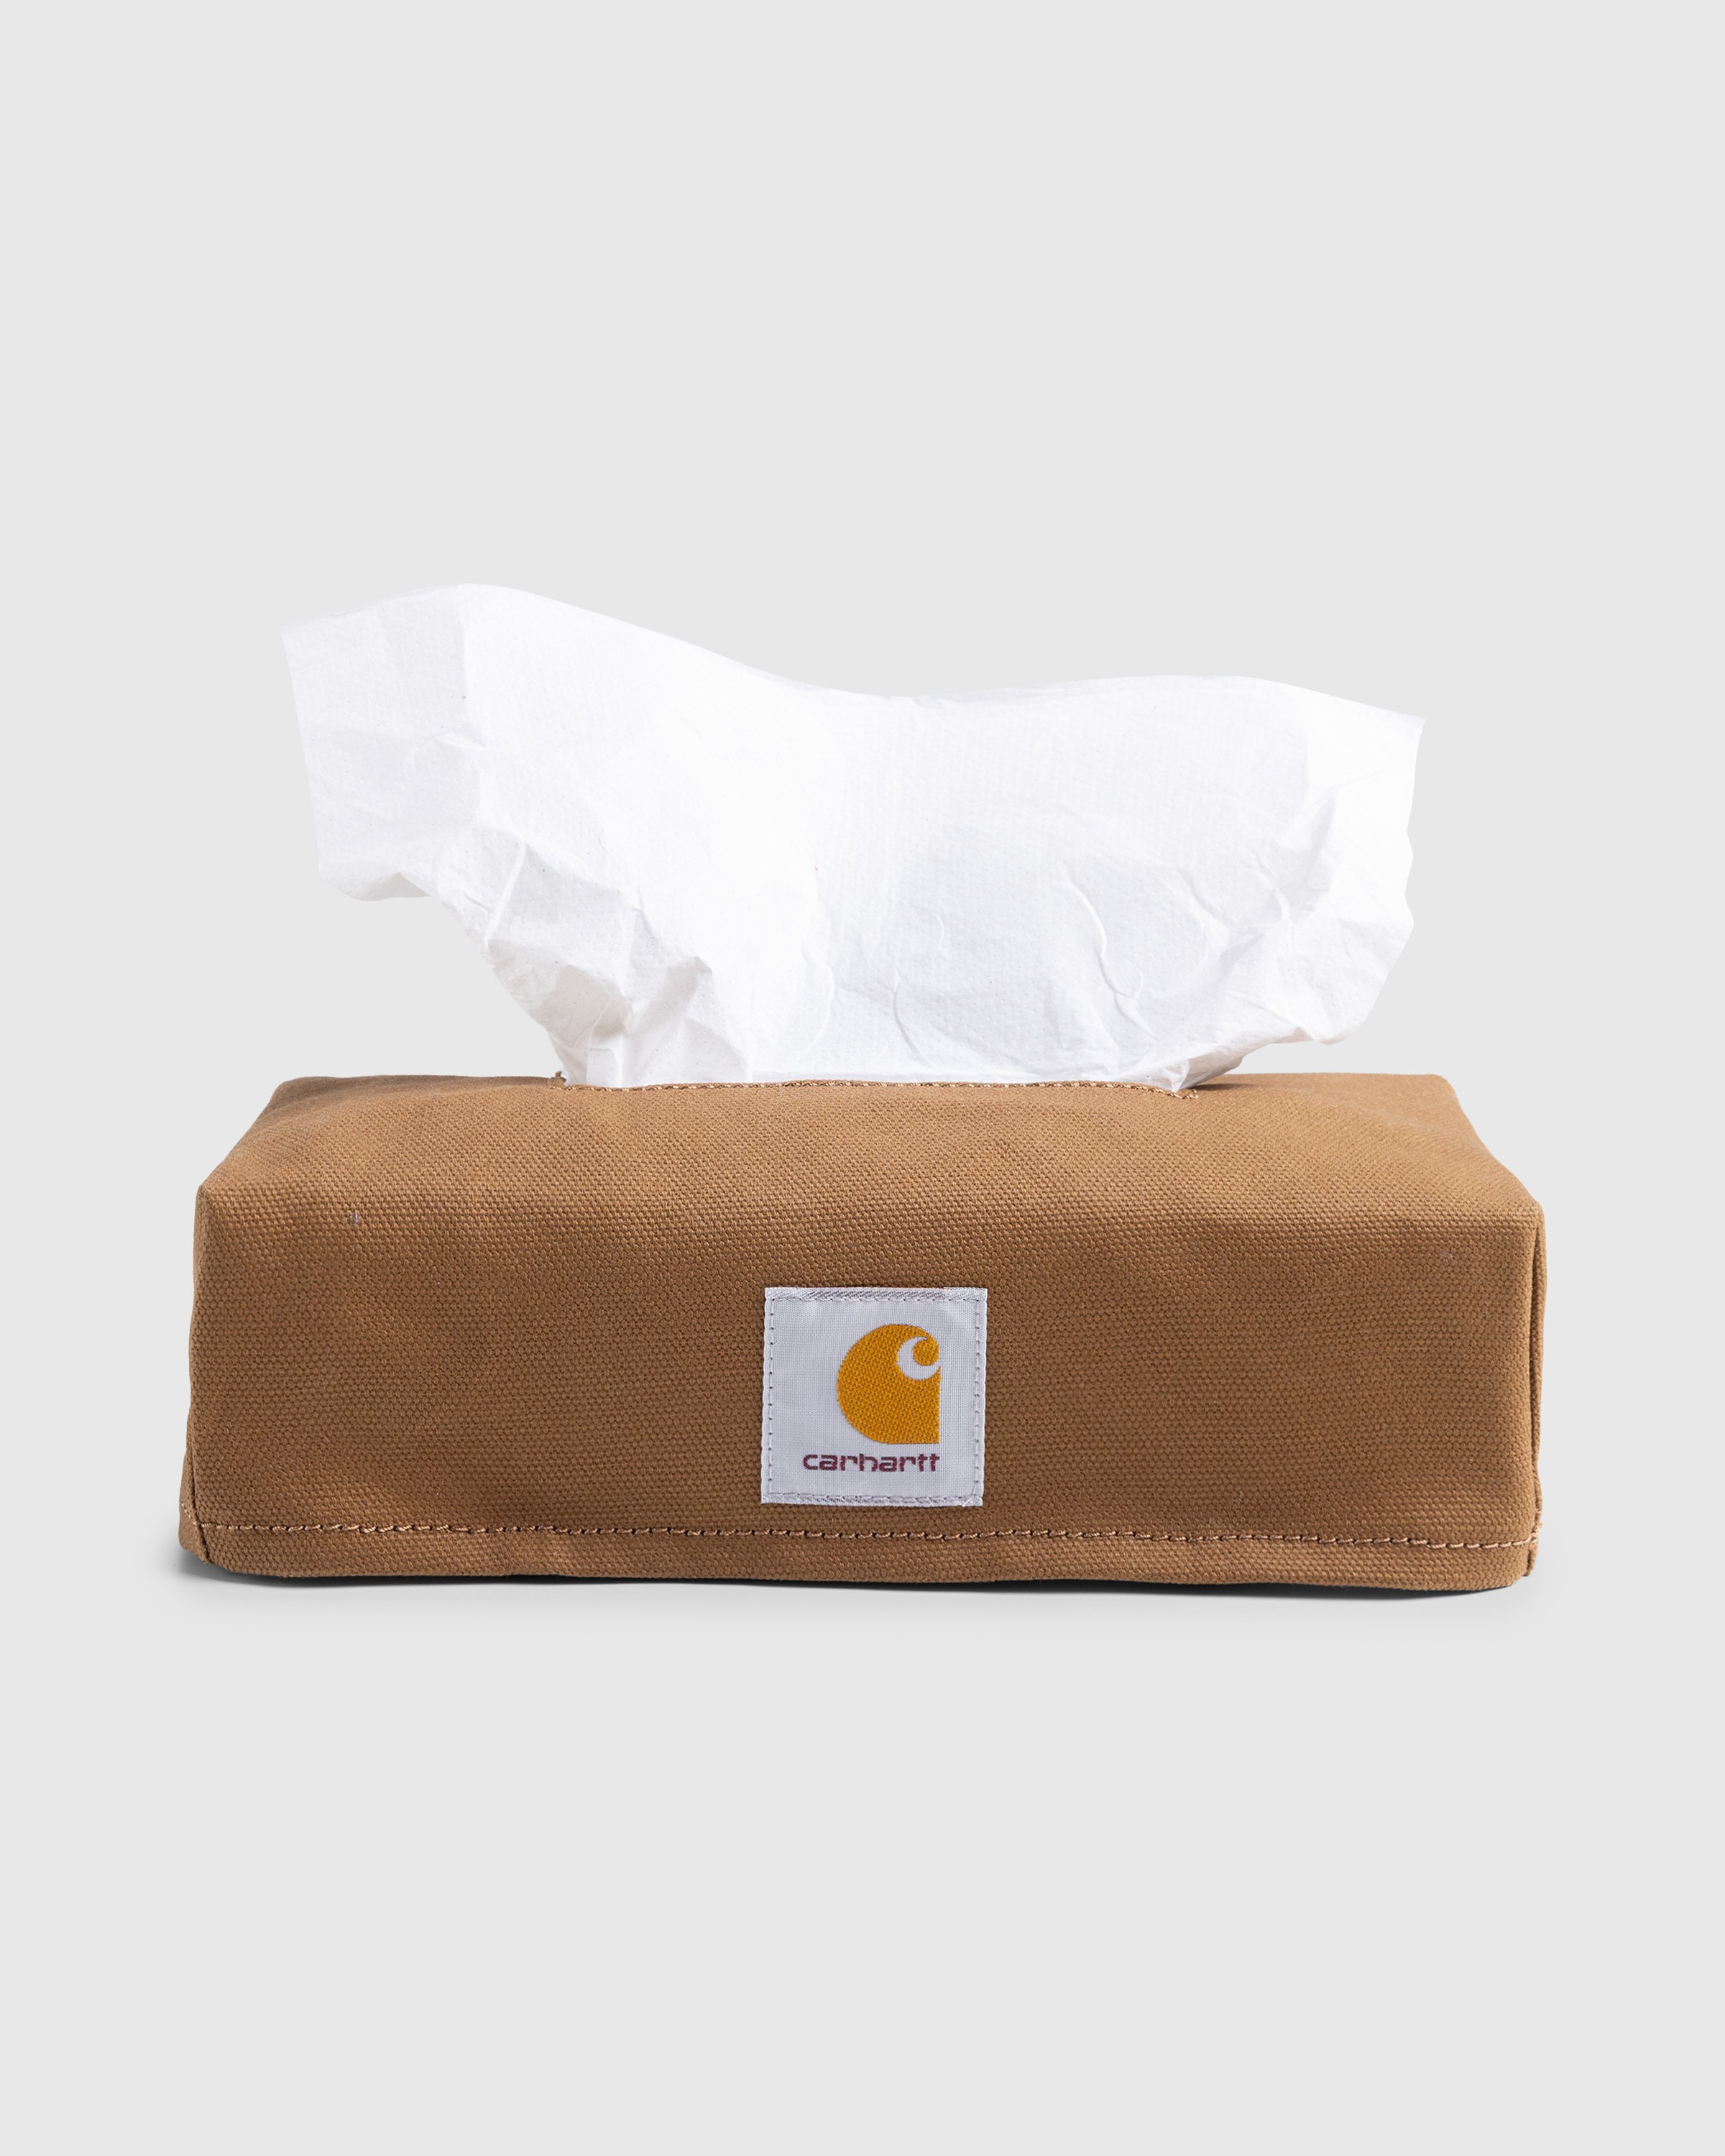 Carhartt WIP - Tissue Box Cover Hamilton Brown - Lifestyle - Brown - Image 1